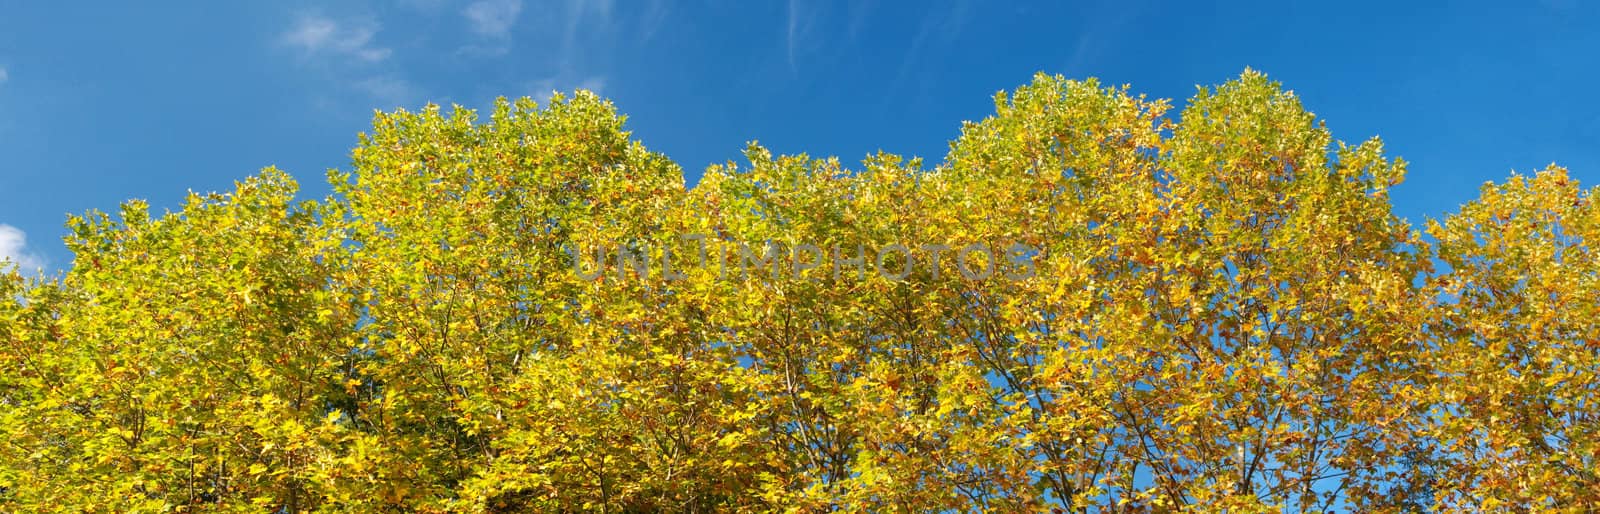 Panoramic view of beautiful autumn trees